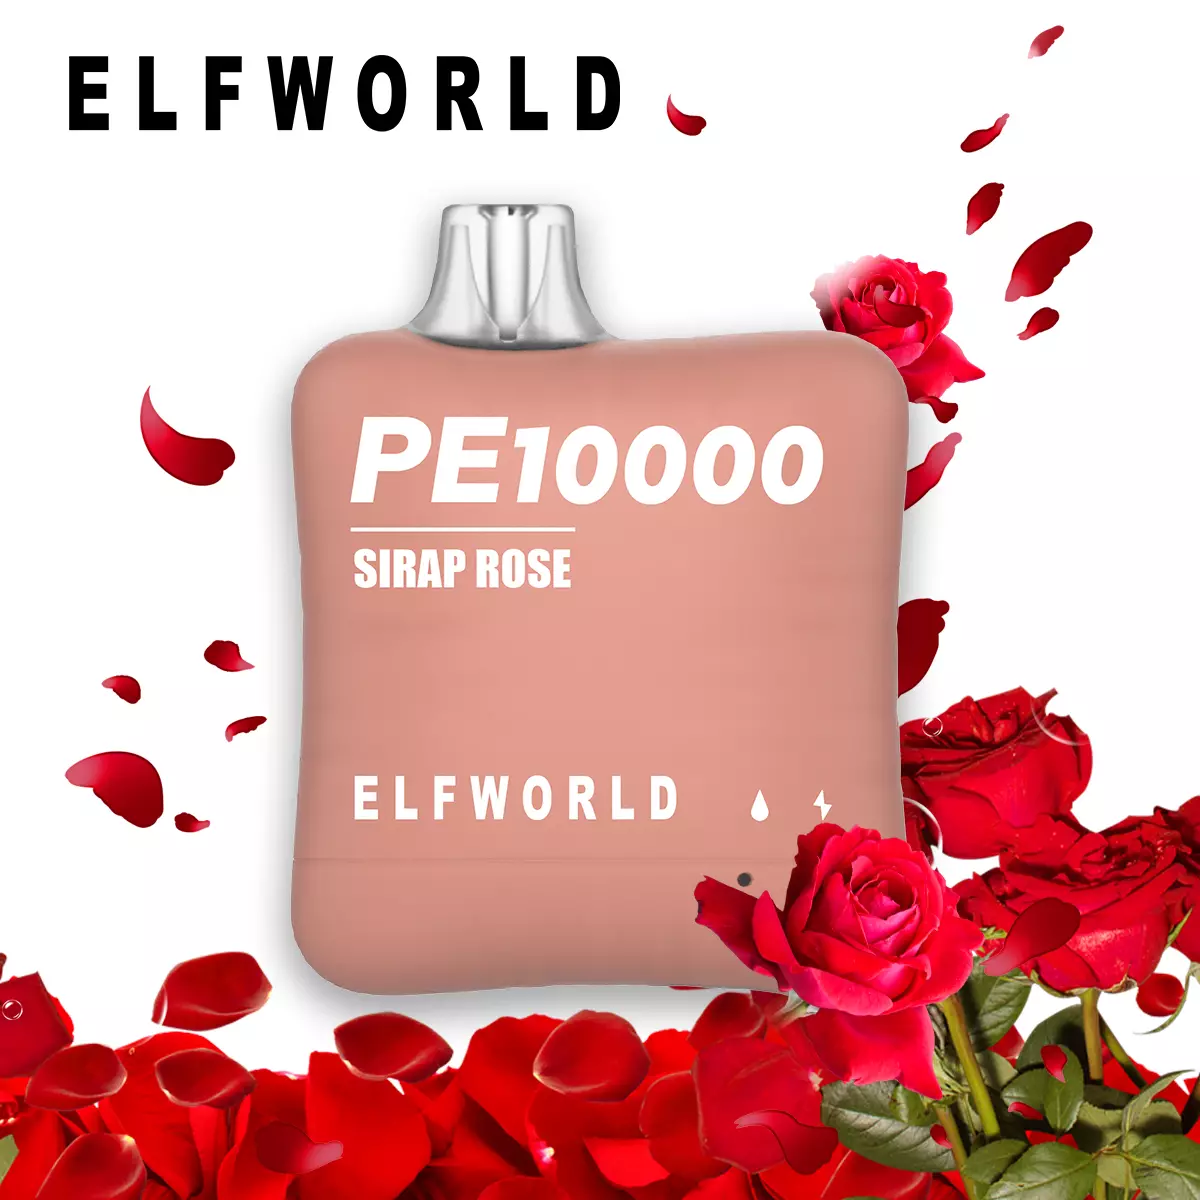 Elf World PE 10000 Sirap Rose